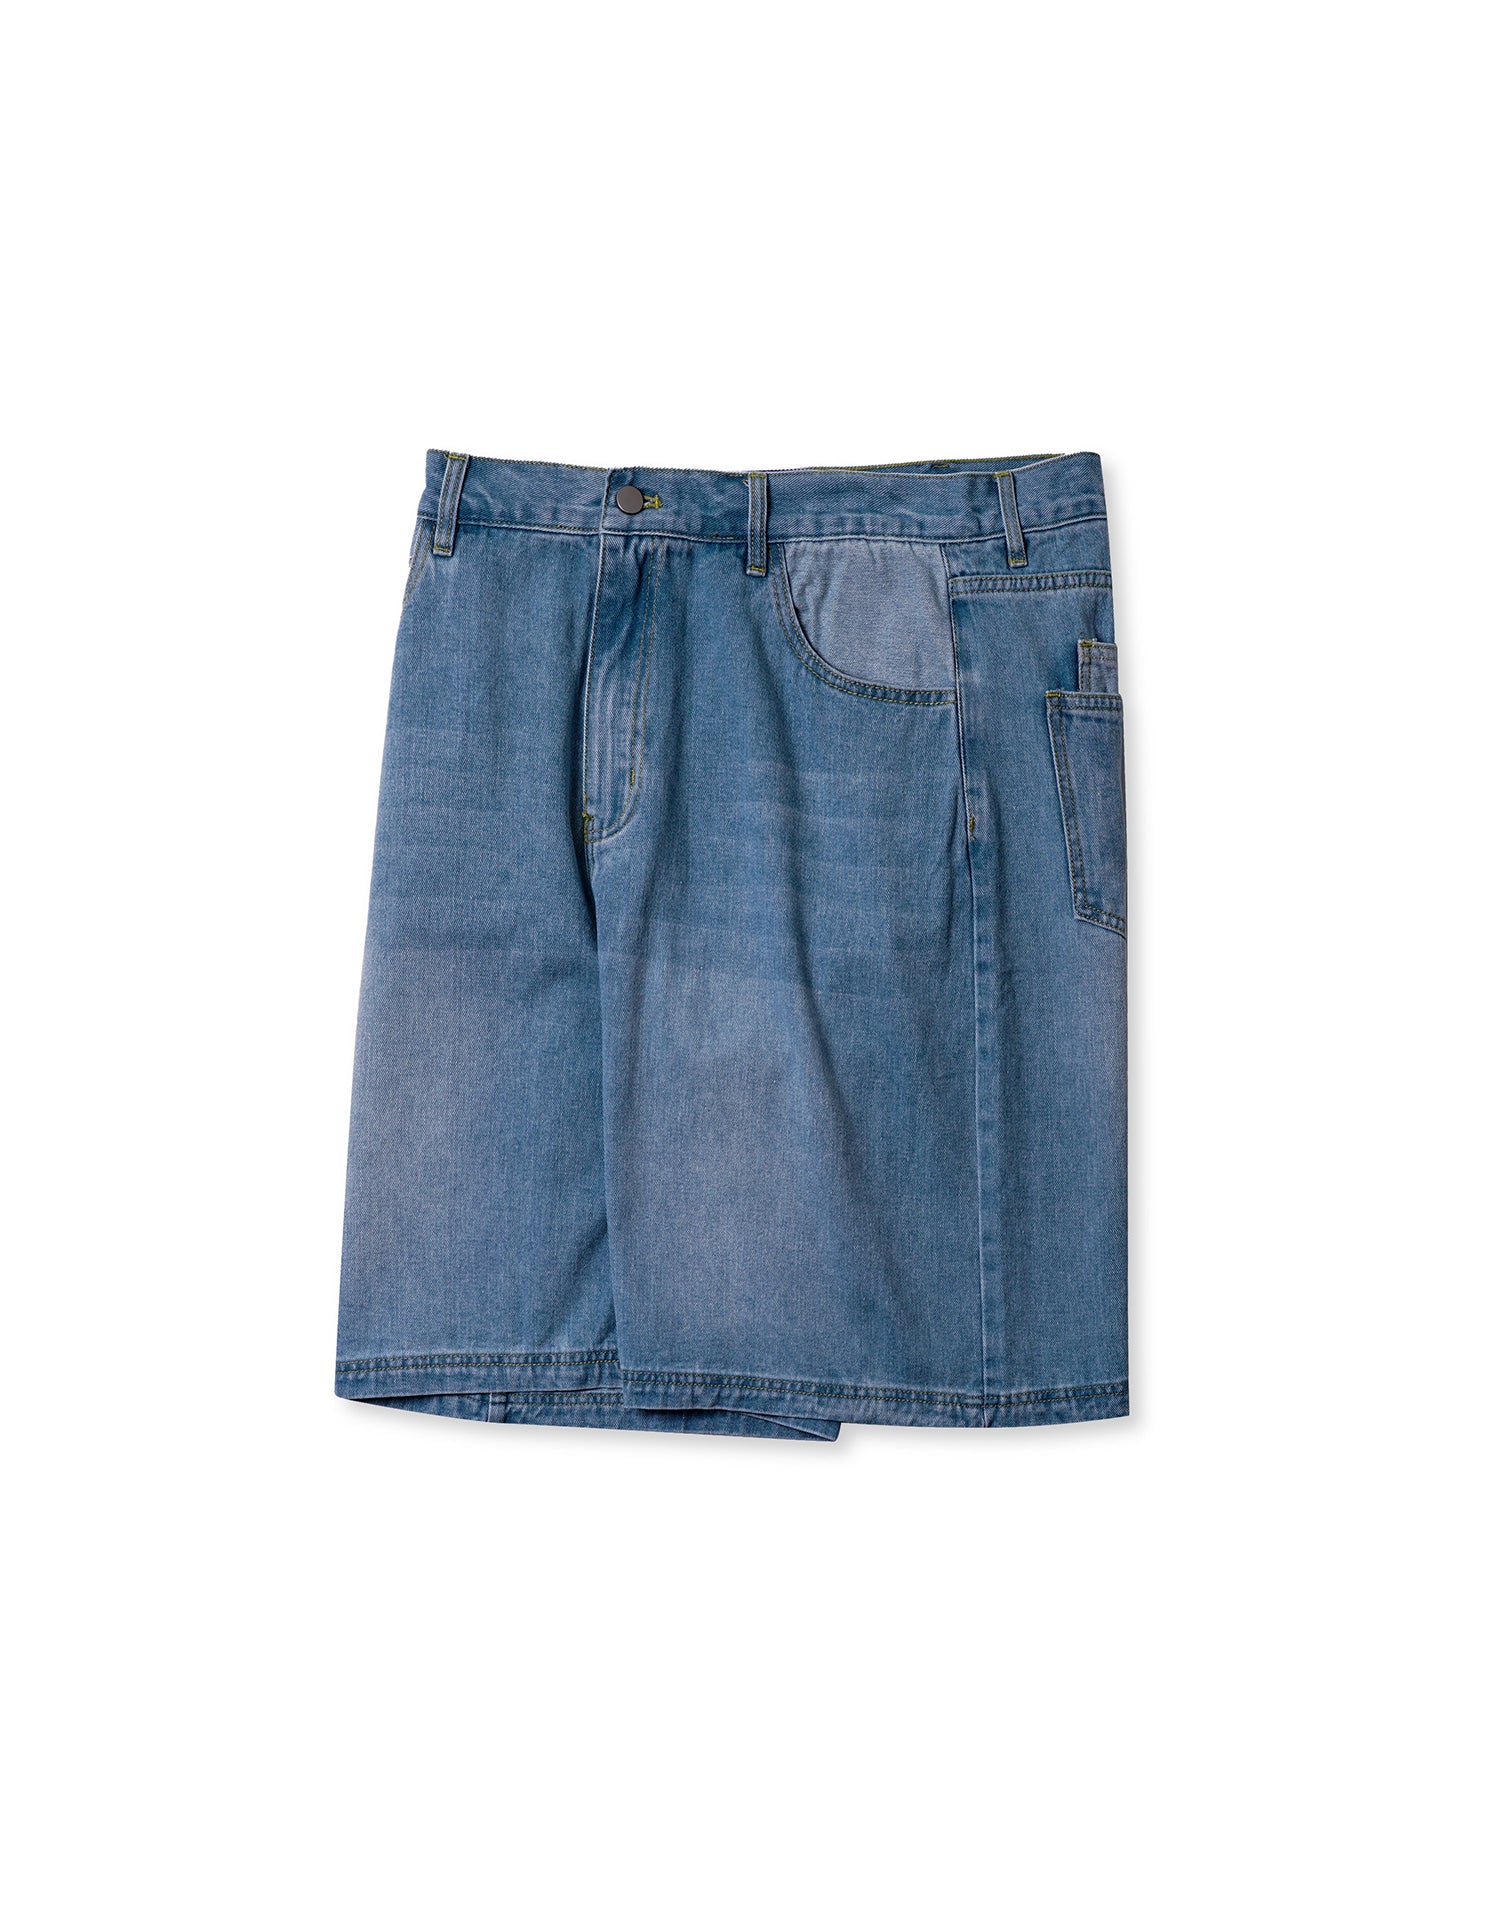 TopBasics Seven Pockets Denim Shorts